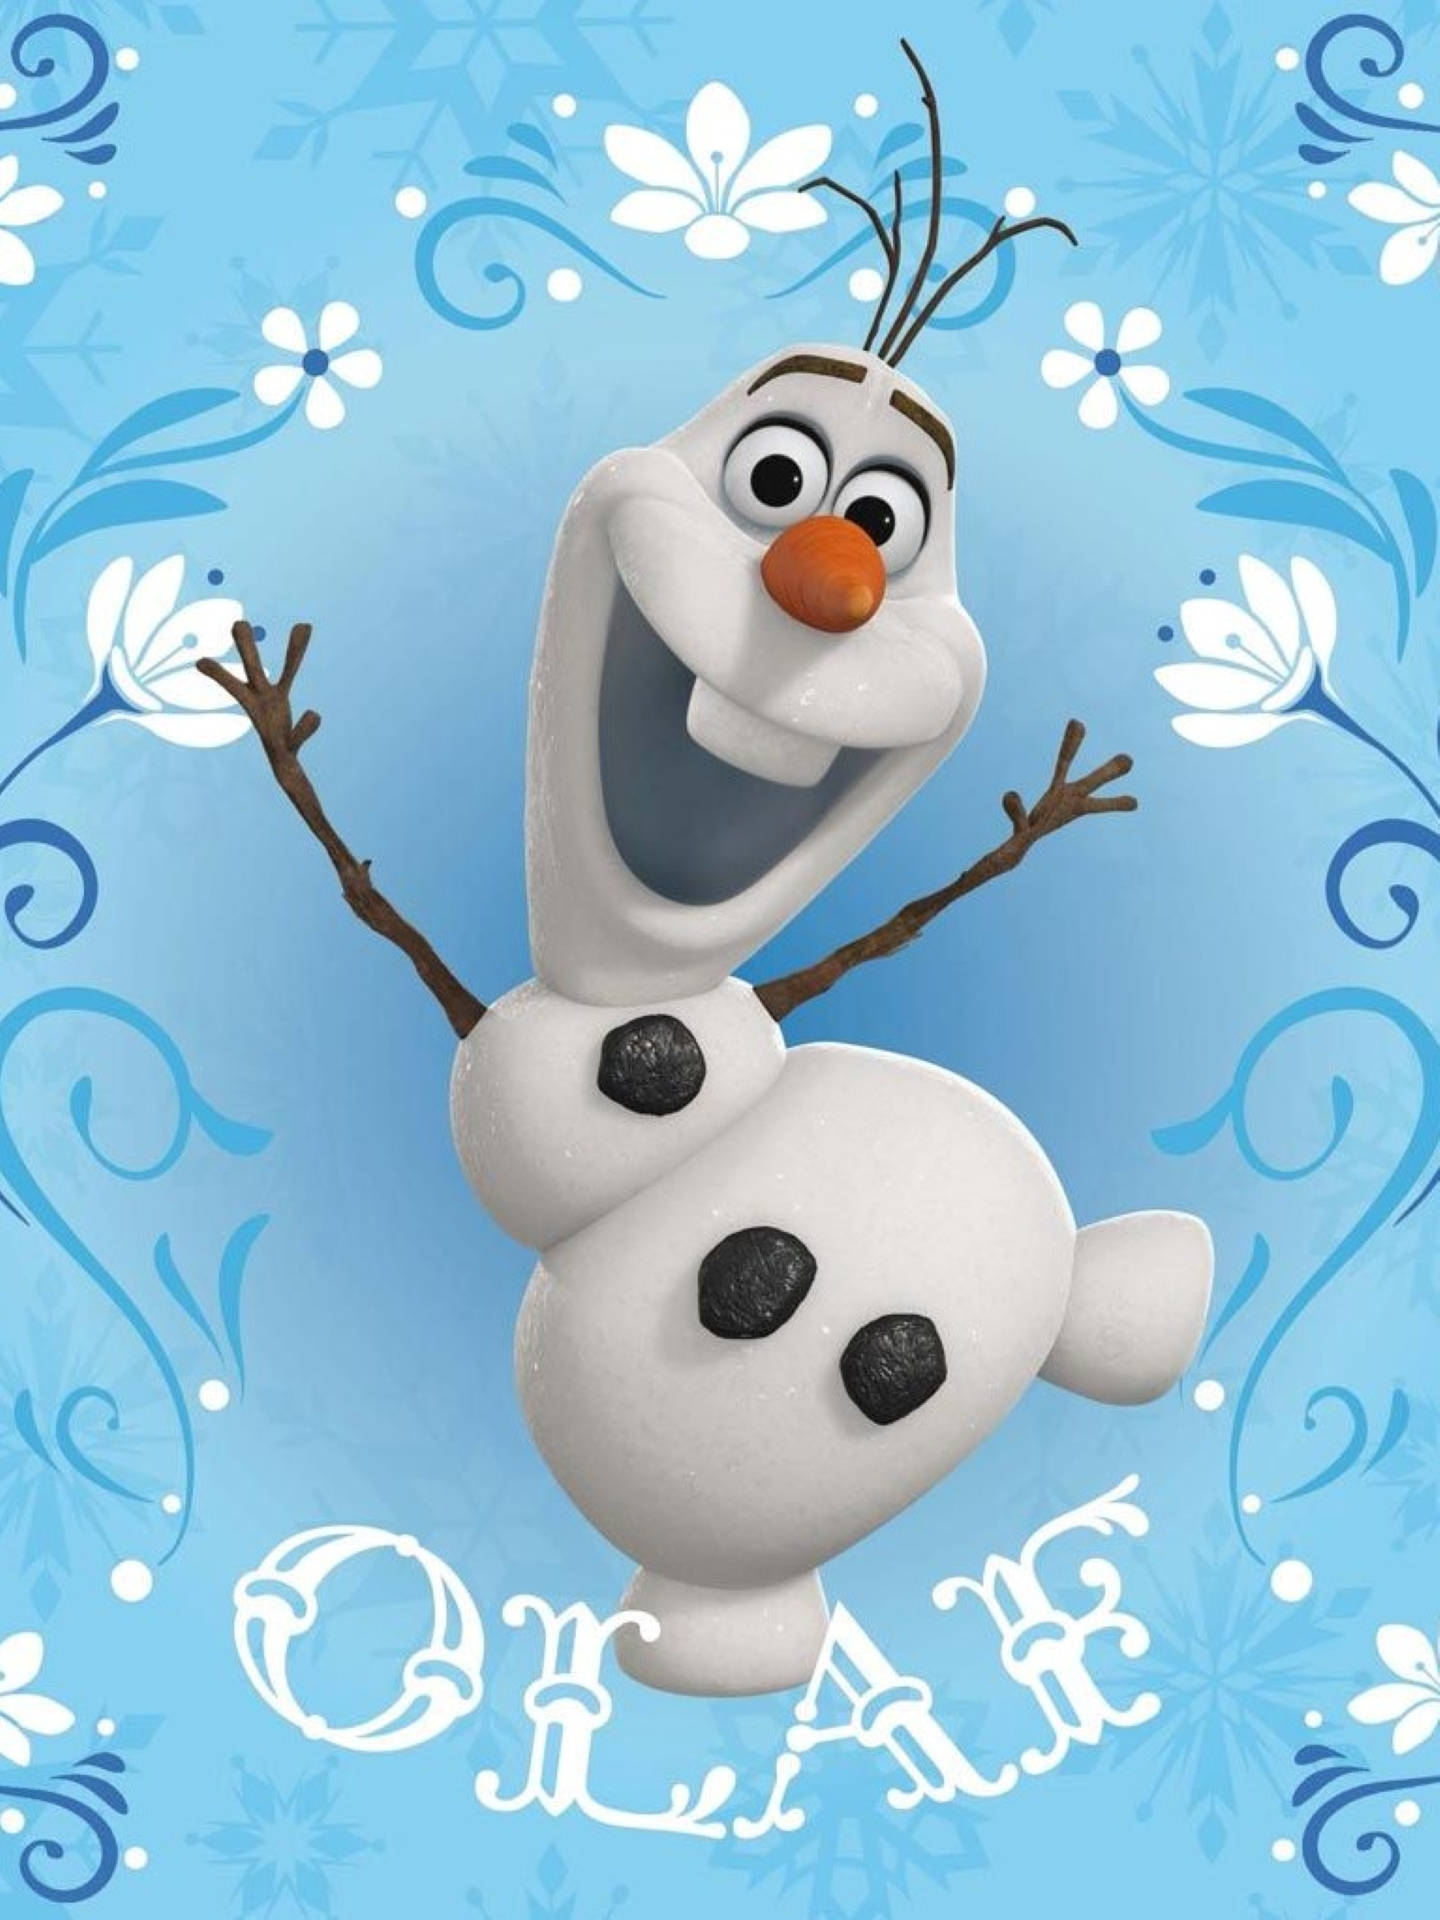 Olaf The Friendly Snowman Wallpaper